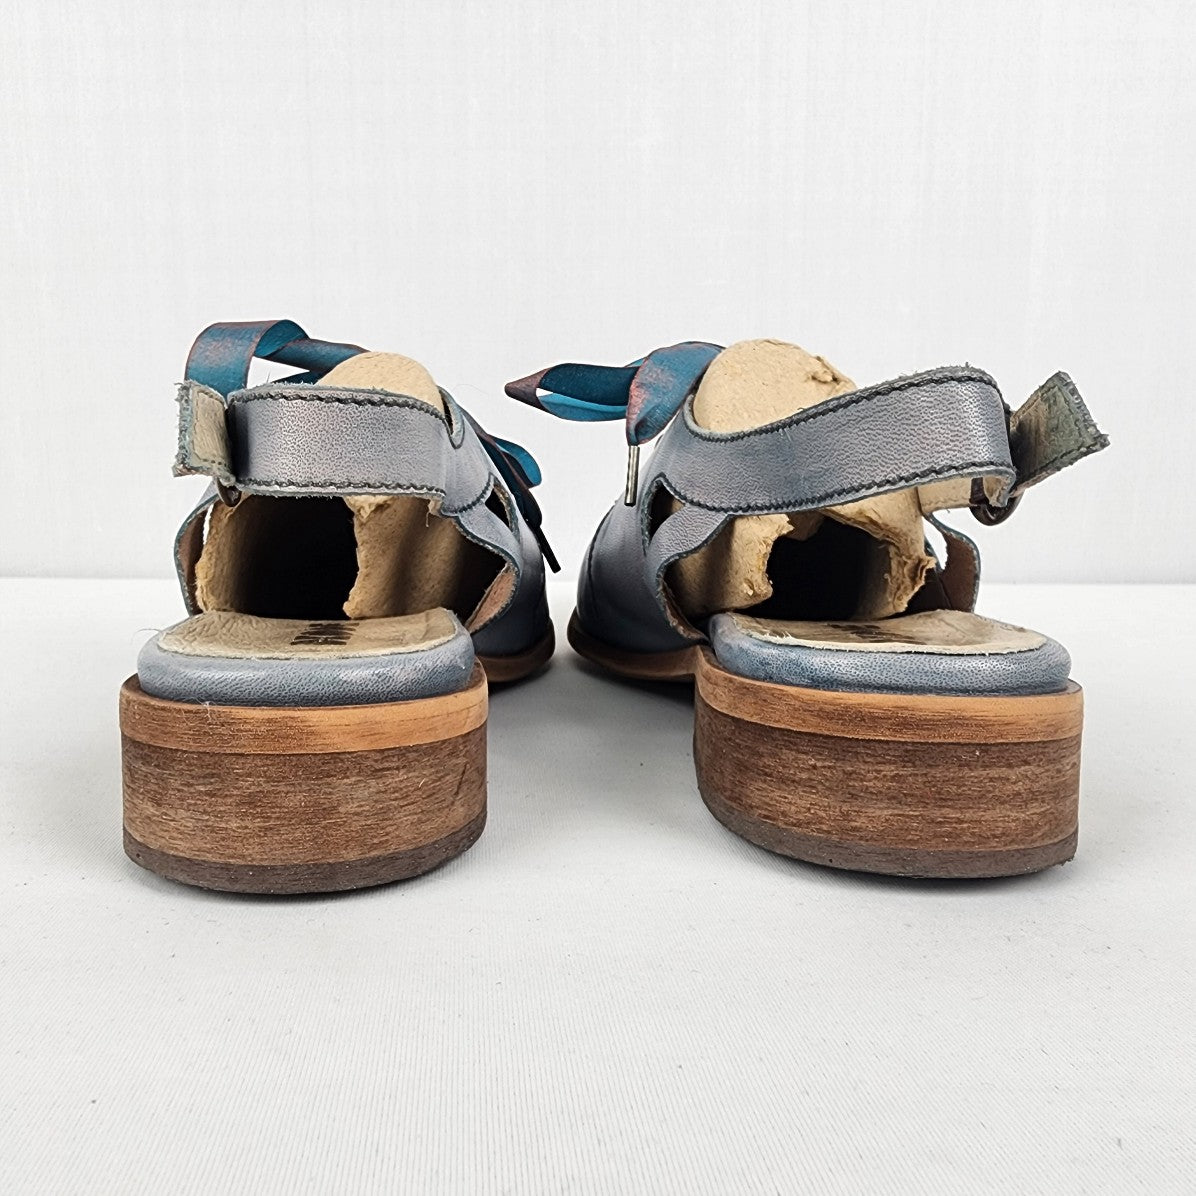 Dkode Blue Leather Sling Back Mule Shoes Size 8.5